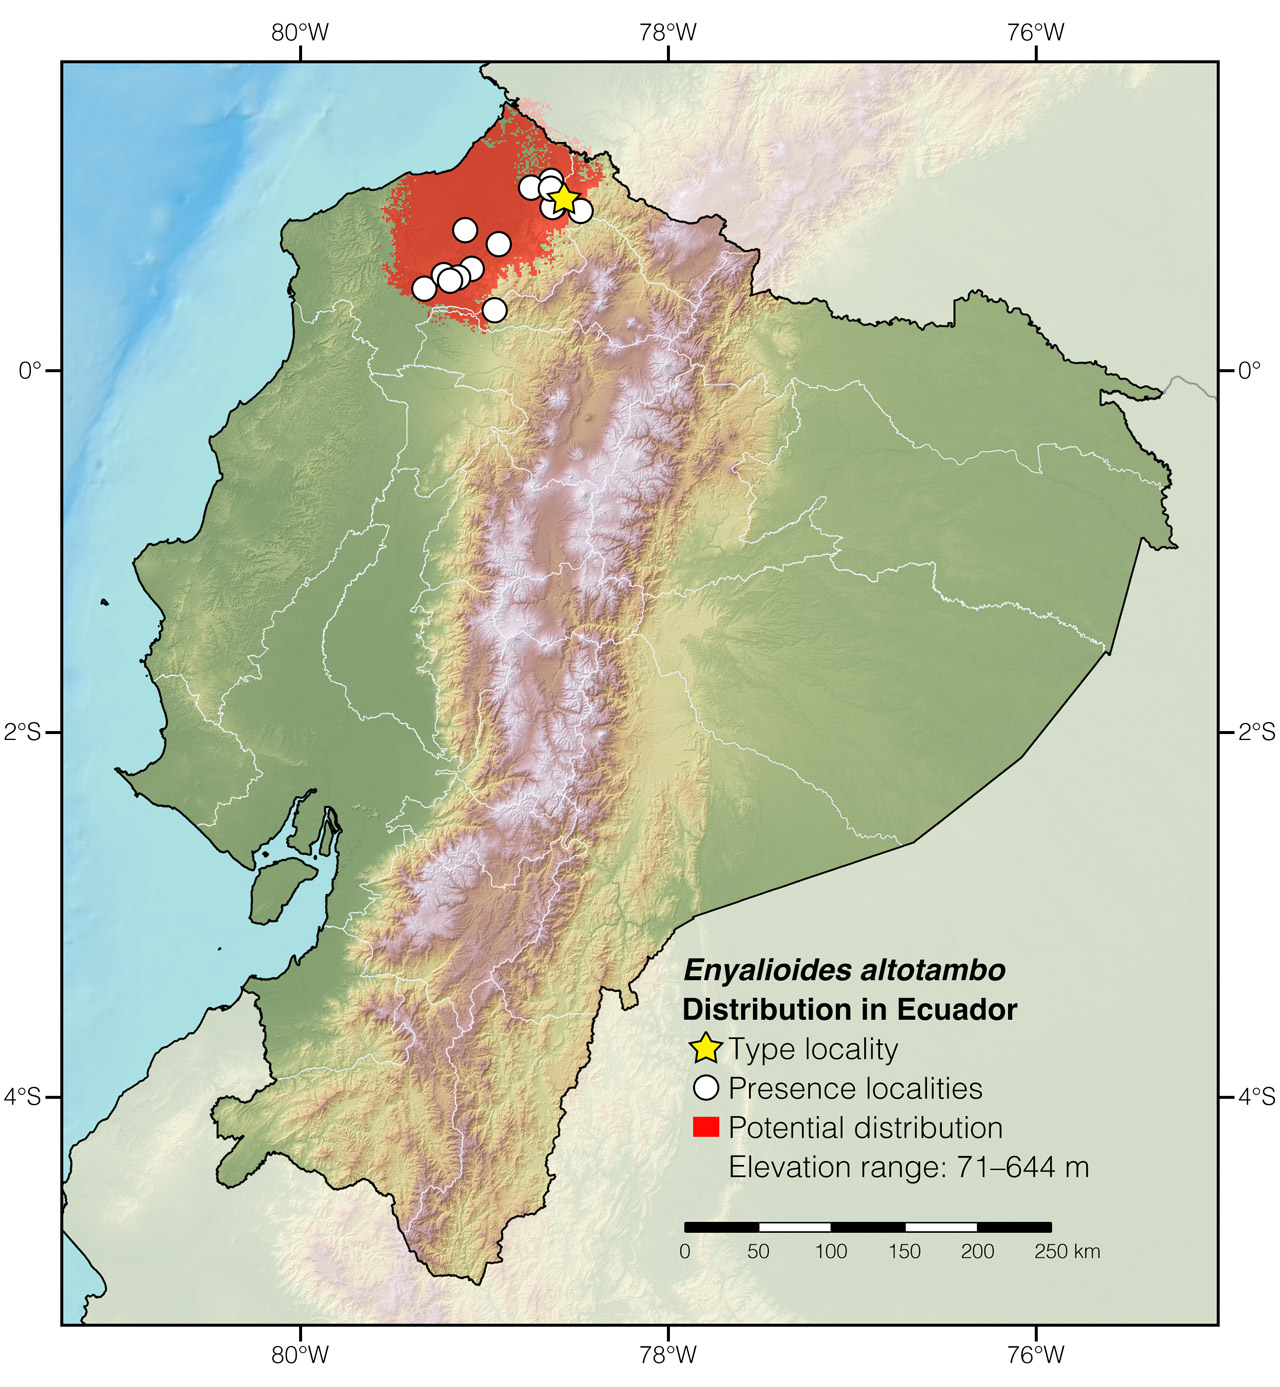 Distribution of Enyalioides altotambo in Ecuador